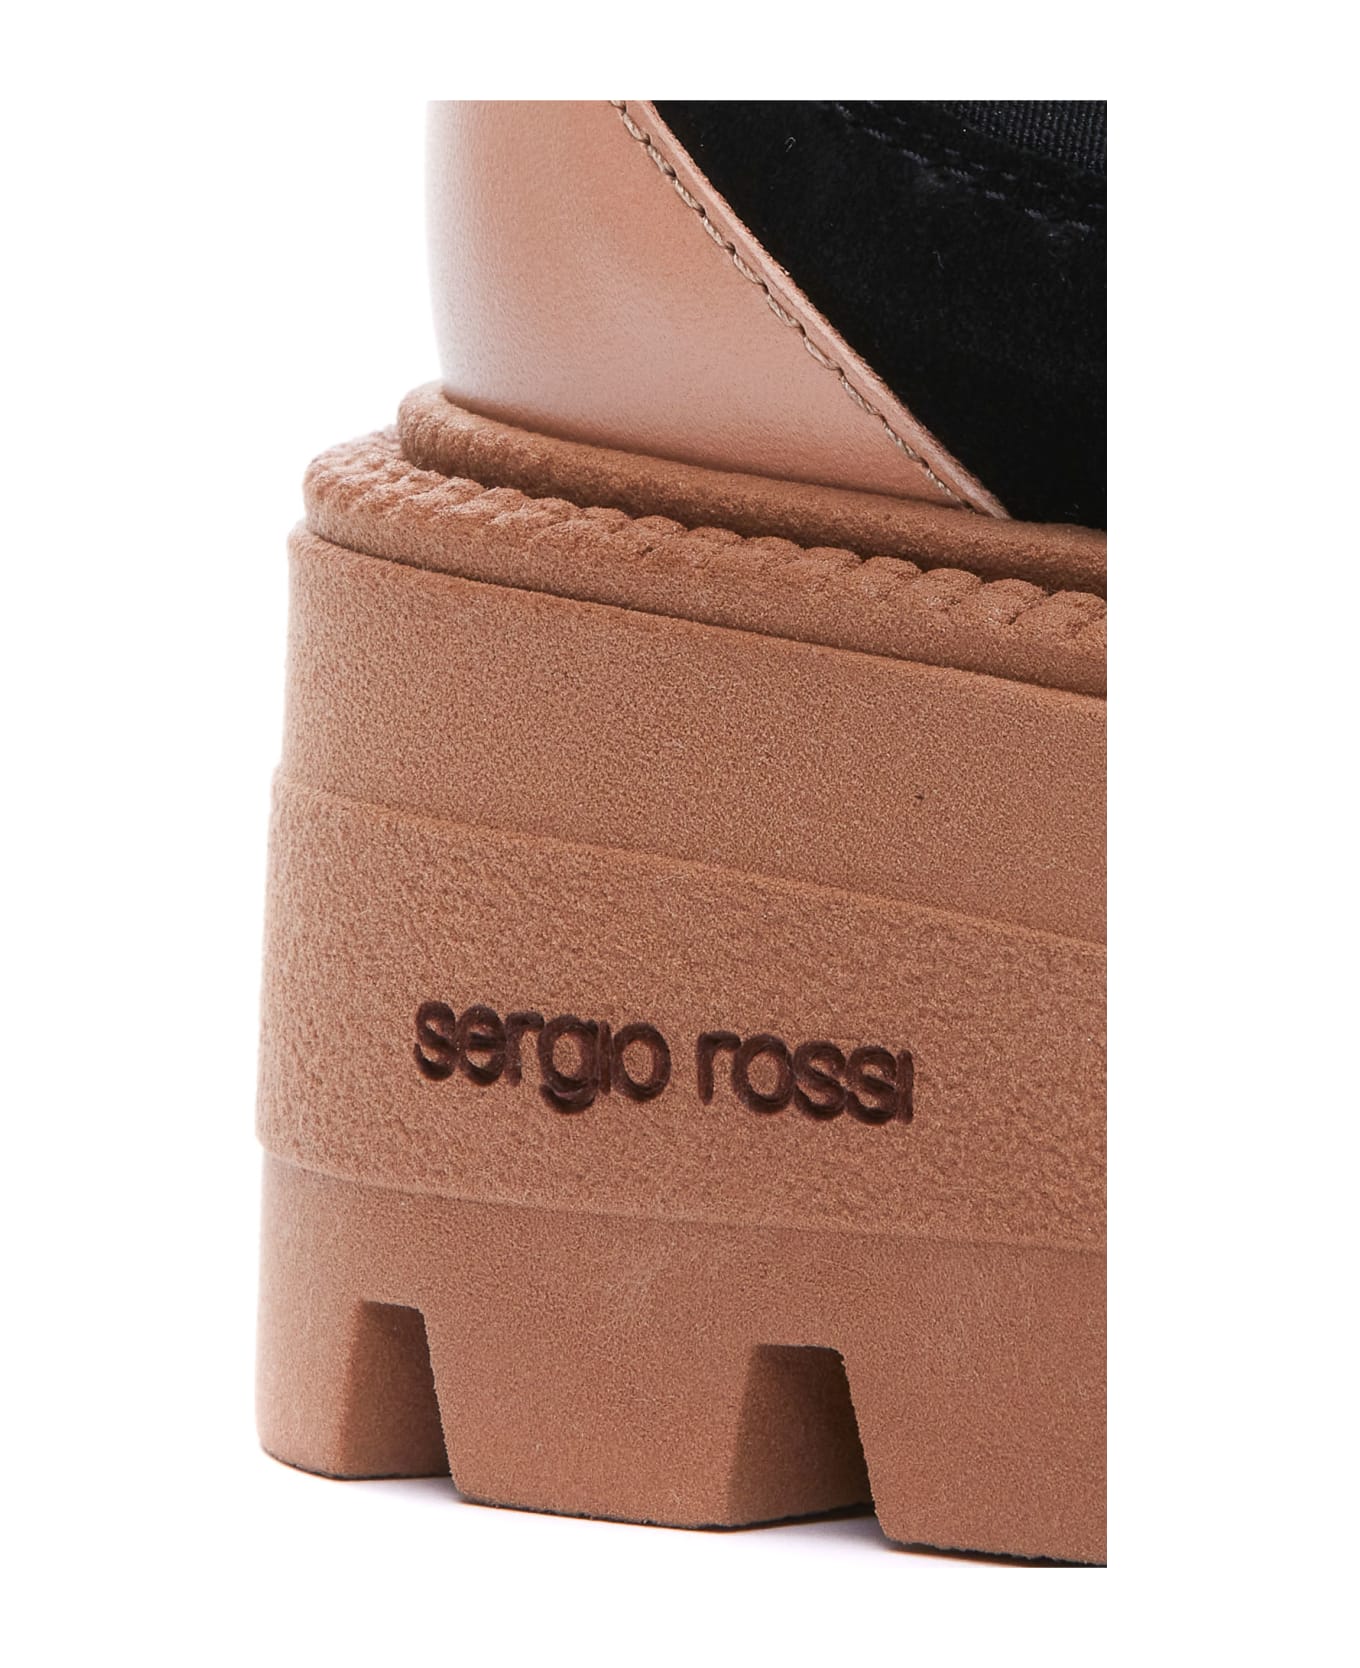 Sergio Rossi Booties - Black